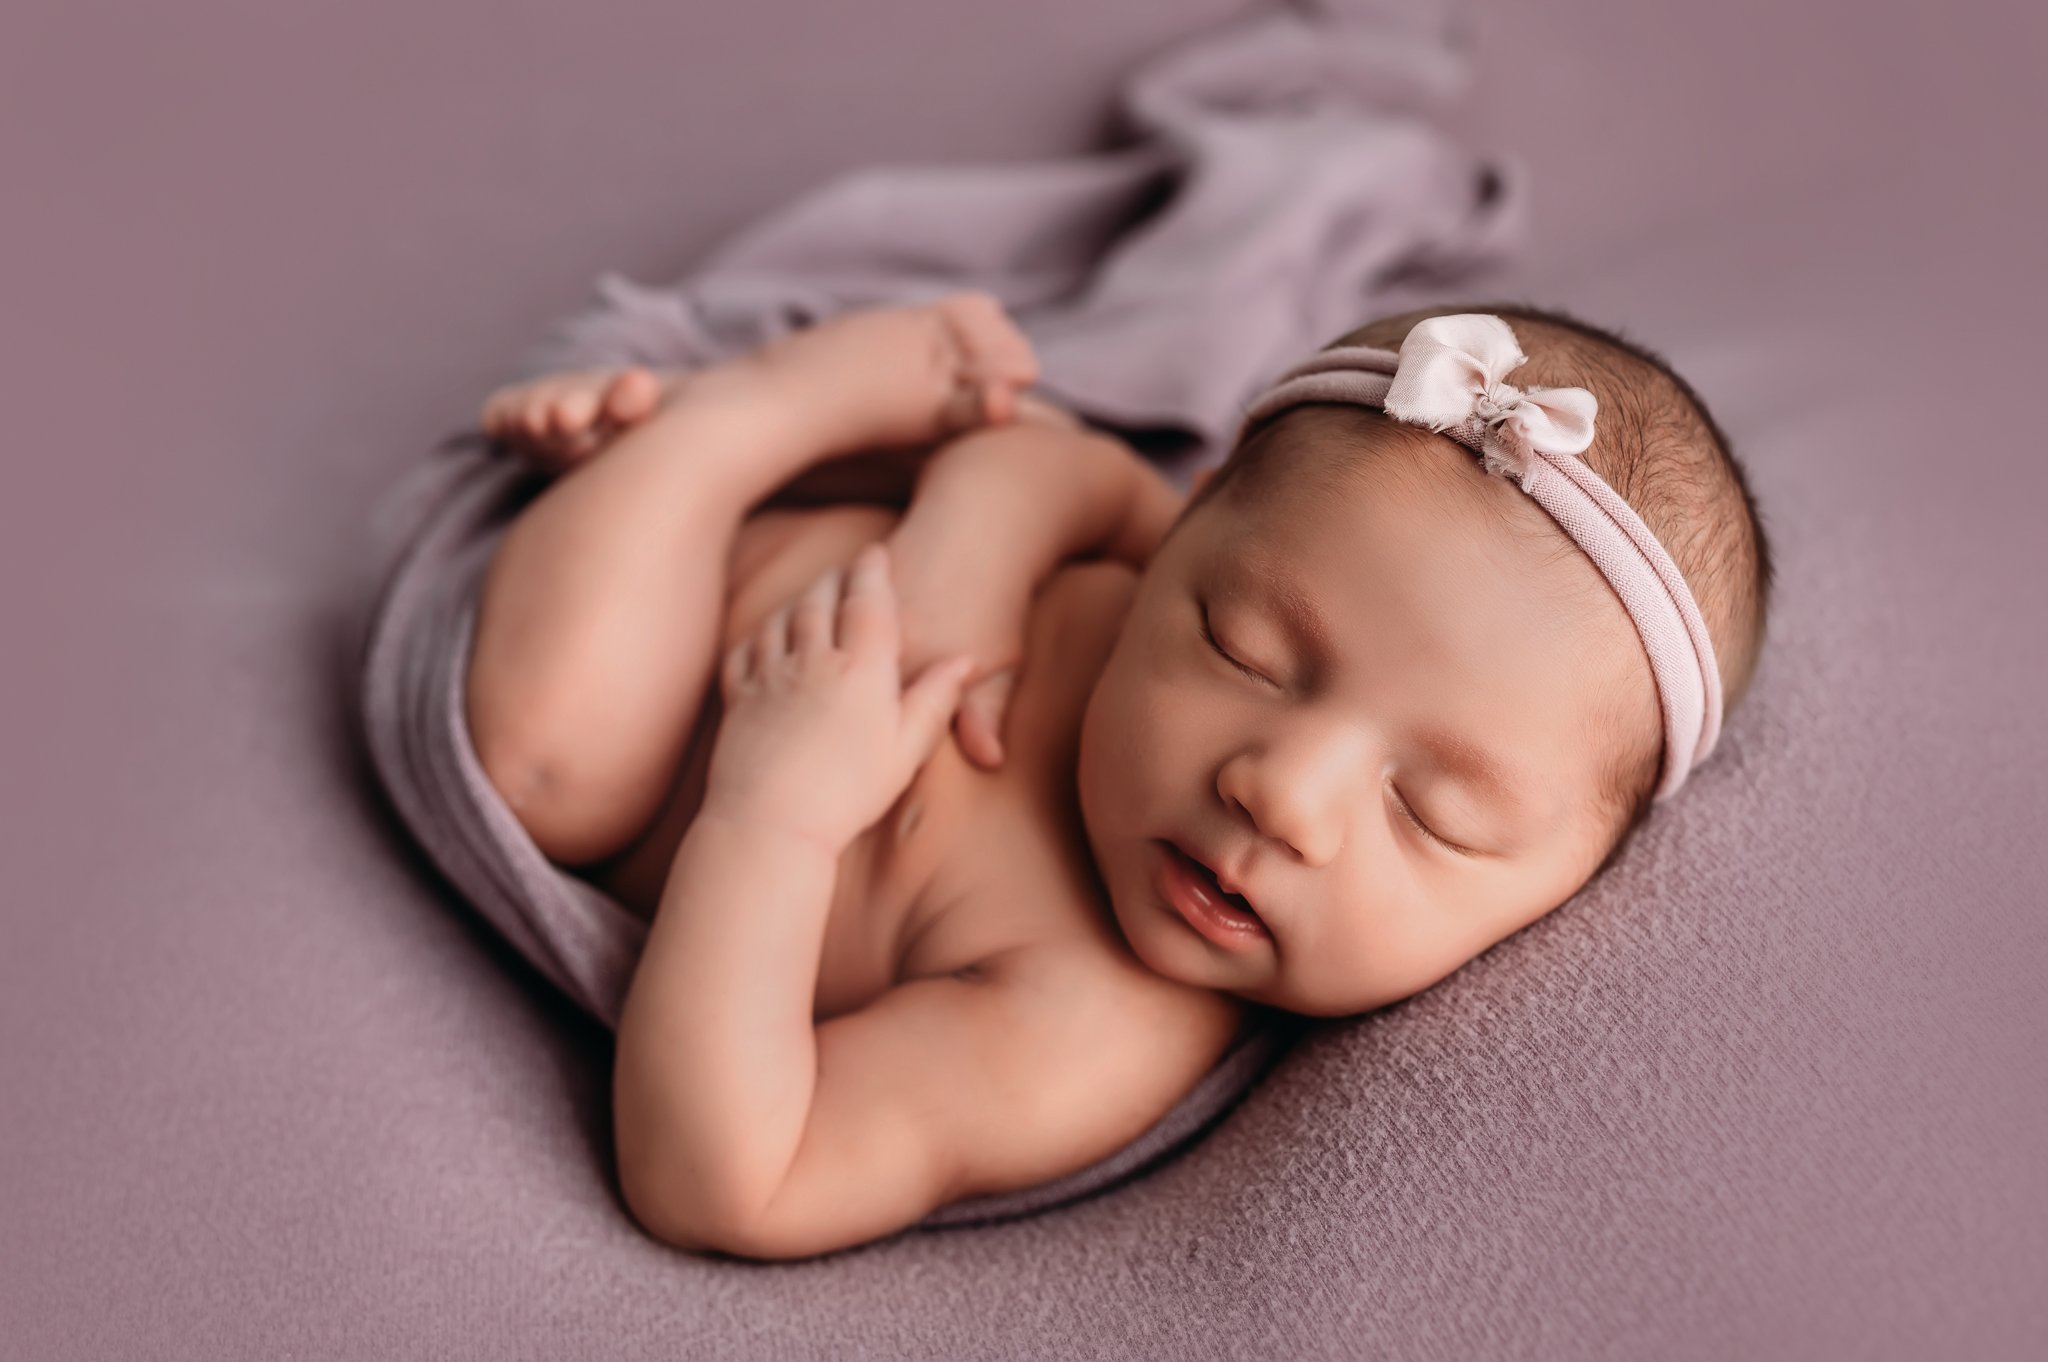 Newborn baby girl on purple.jpg